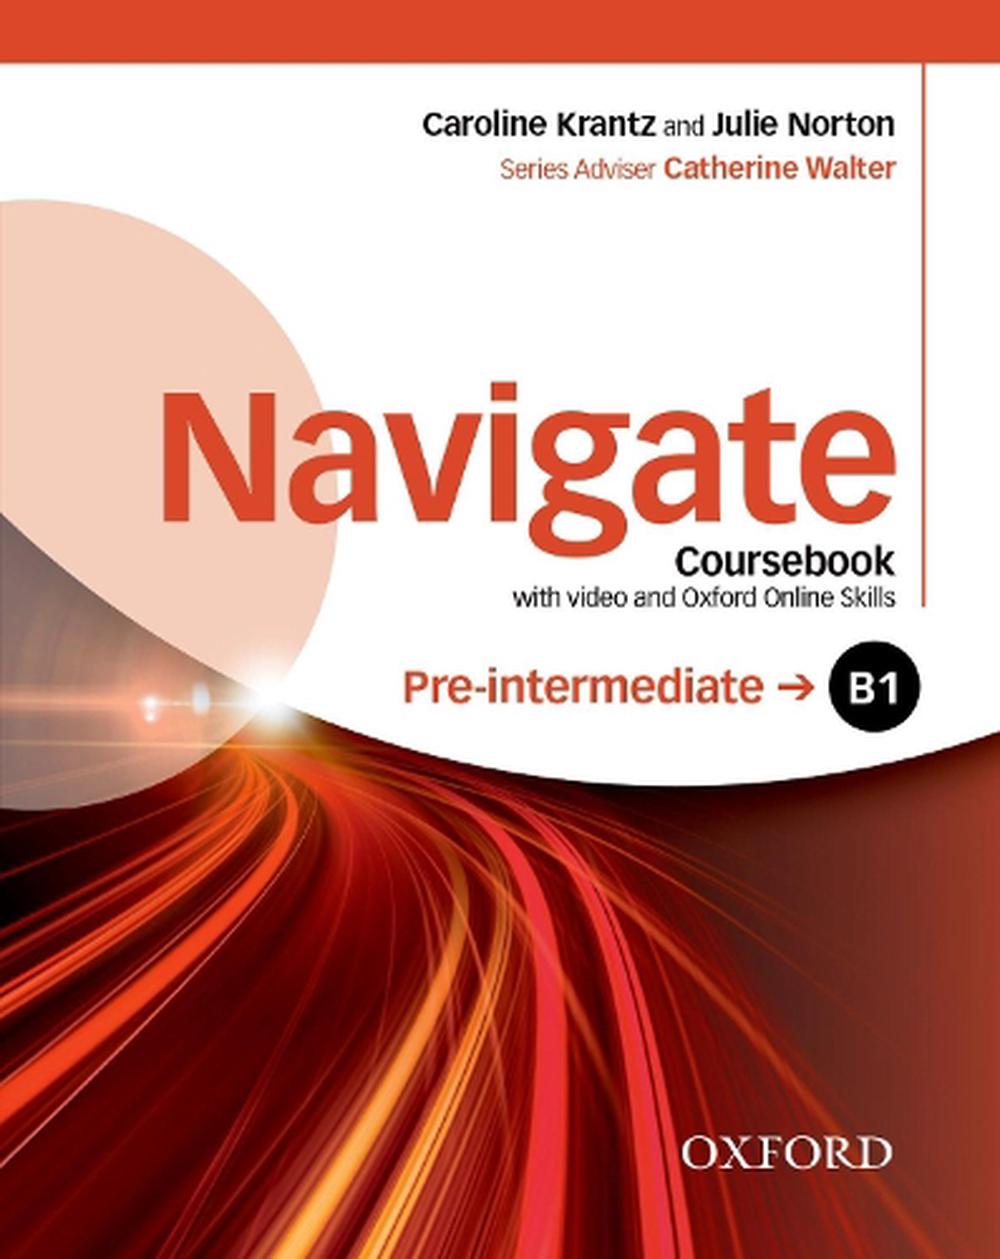 Caroline　at　Buy　Skills　Book　Navigate:　DVD　Online　and　with　Pre-intermediate　Coursebook　9780194566490　by　Merchandise,　online　B1:　Program　Oxford　Krantz,　The　Nile